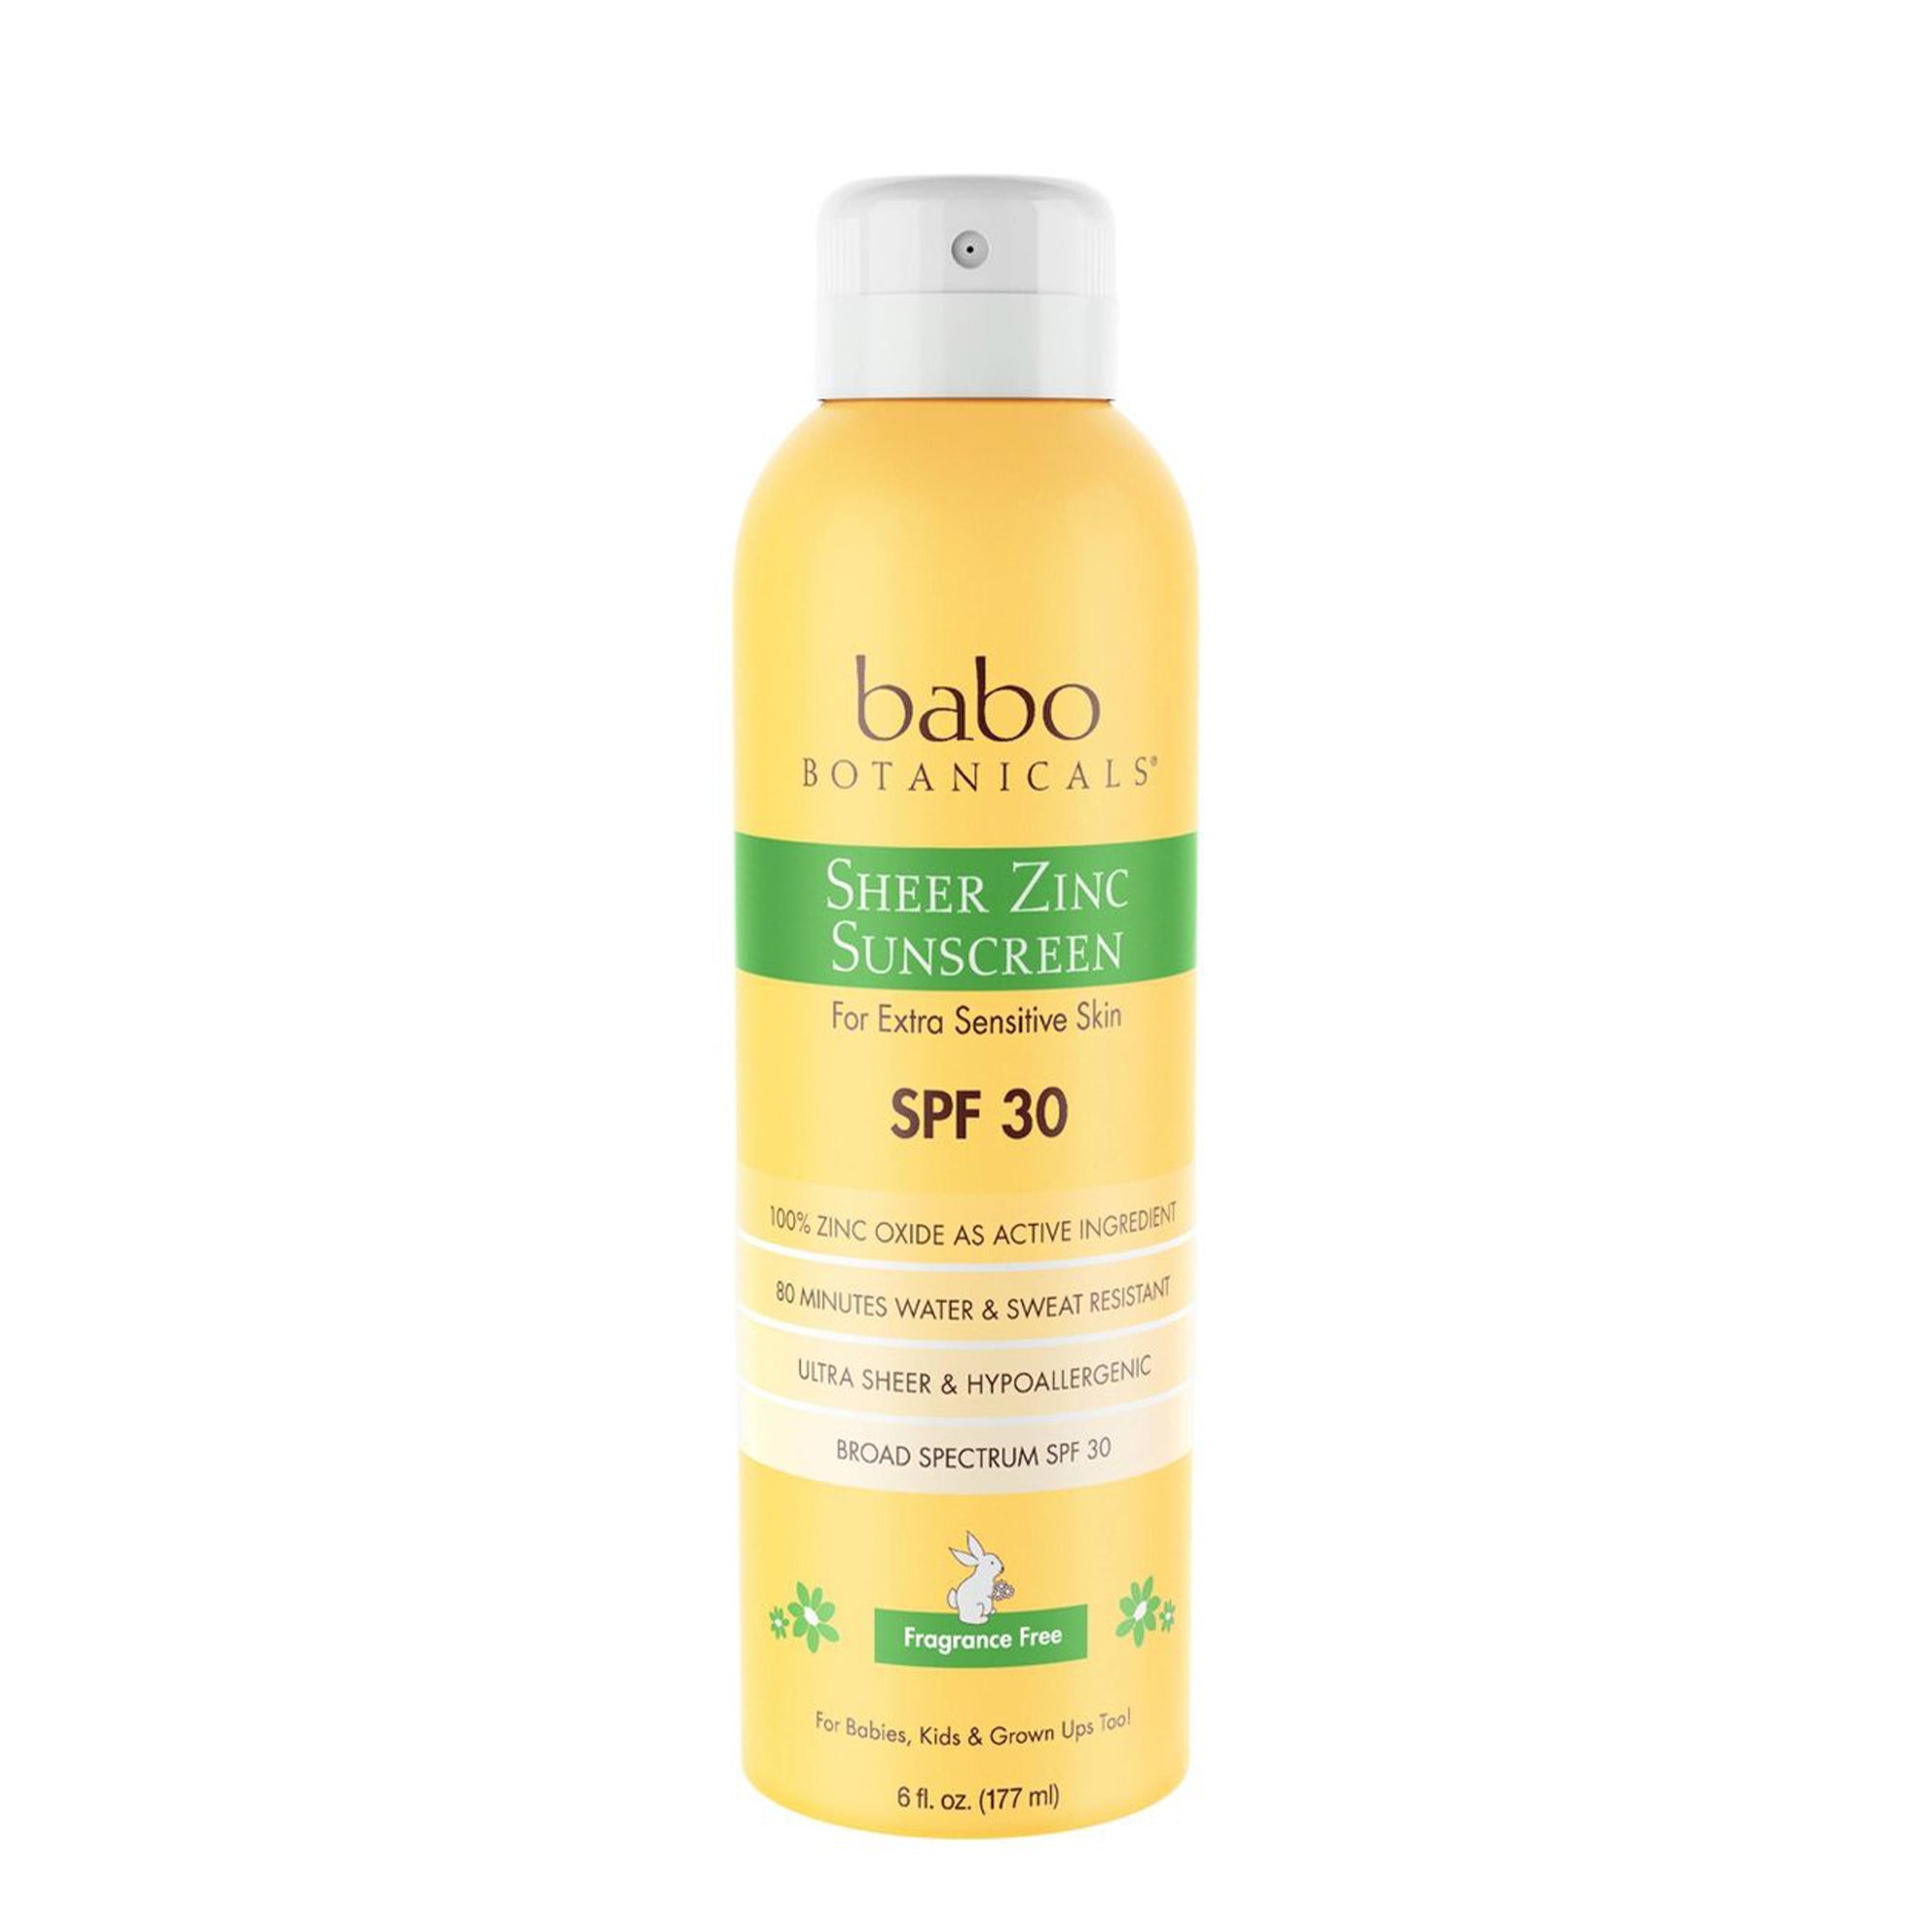 Babo Botanicals Sheer Zinc Sunscreen Spray Fragrance SPF 30, 6.0 oz